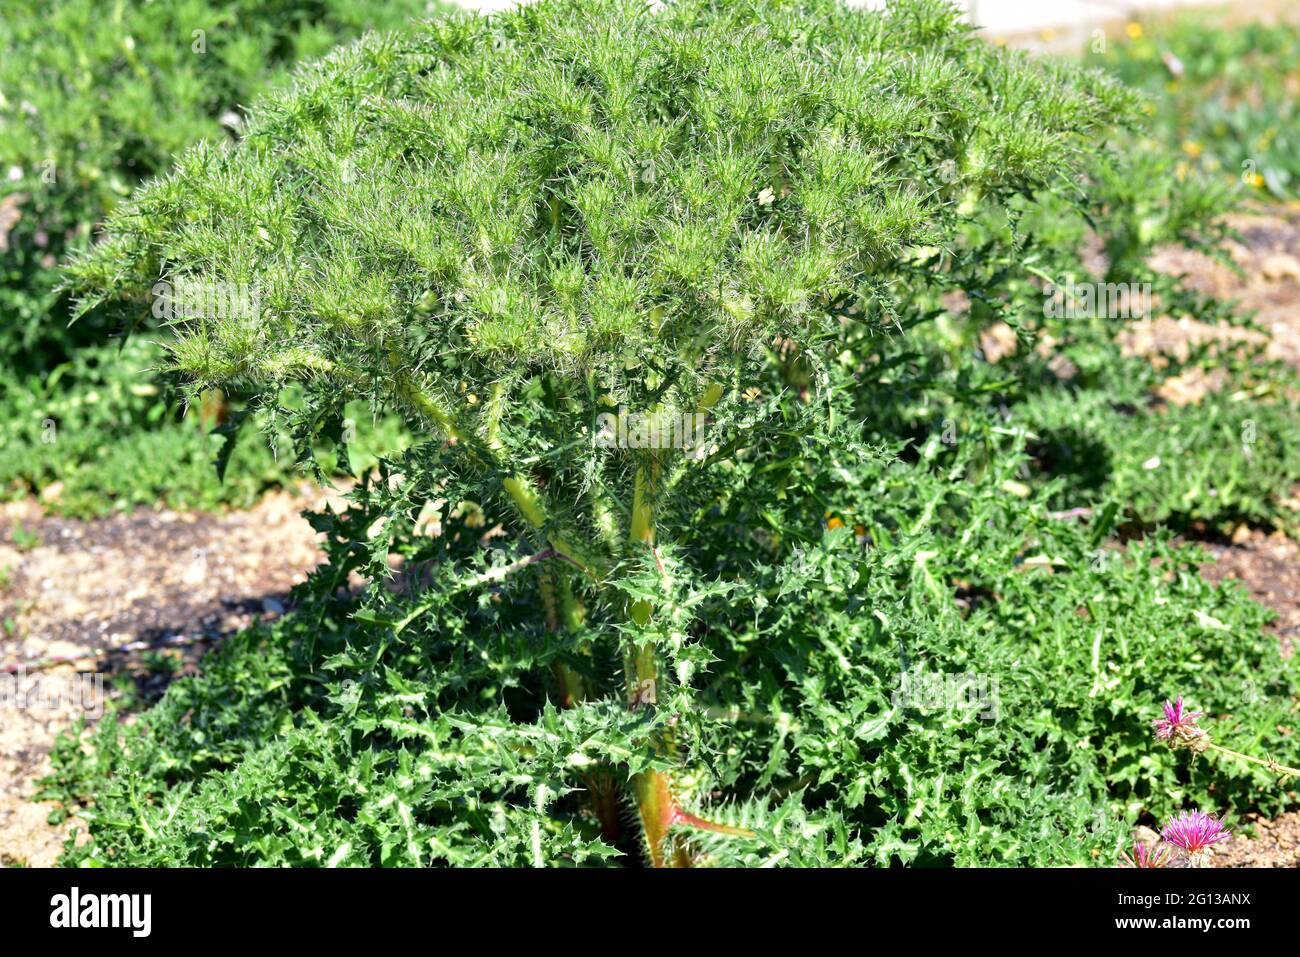 Cardiopatium corymbosum is a spiny perennial plant native to eastern Mediterranean region. Stock Photo